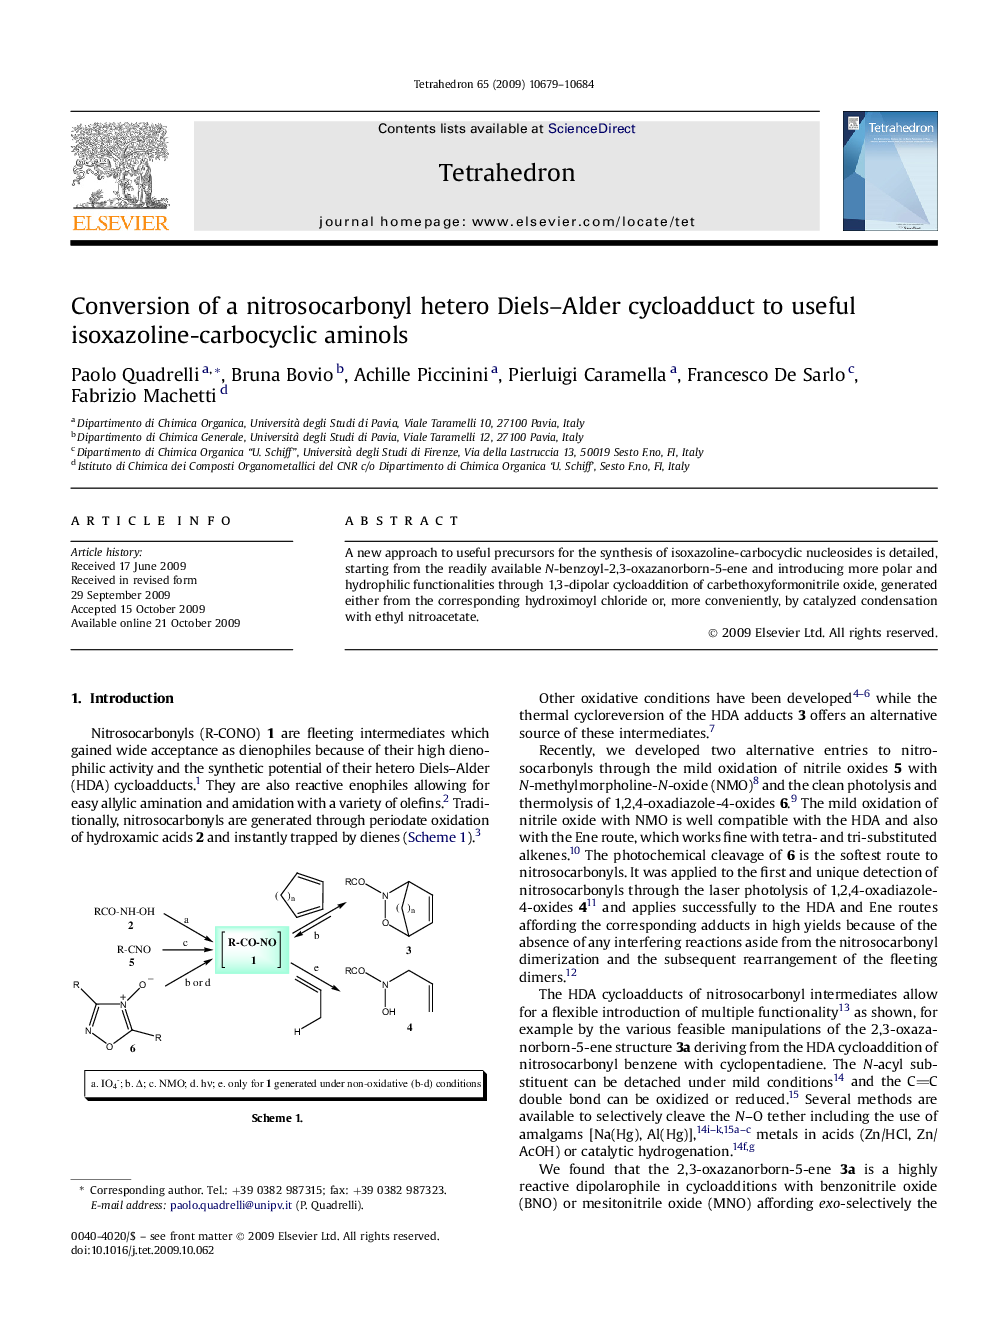 Conversion of a nitrosocarbonyl hetero Diels–Alder cycloadduct to useful isoxazoline-carbocyclic aminols